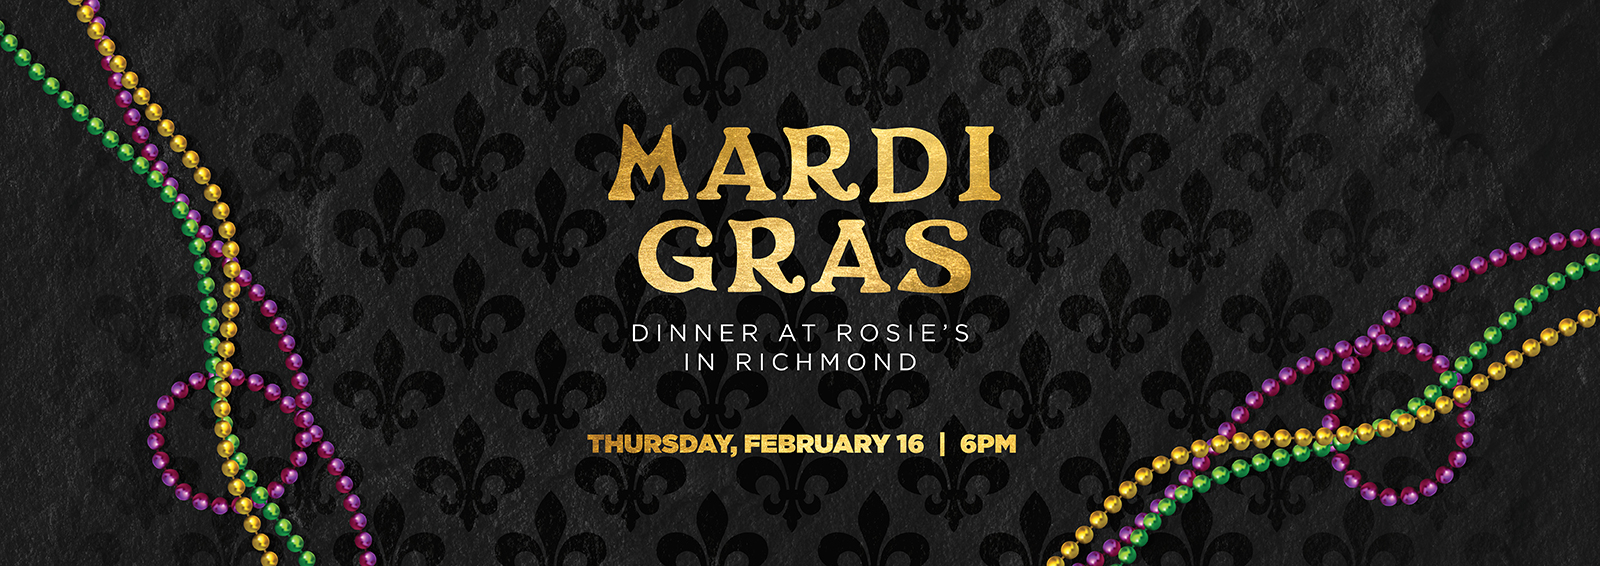 MARDI GRAS DINNER AT ROSIE'S IN RICHMOND THURSDAY, FEBRUARY 16 | 6PM